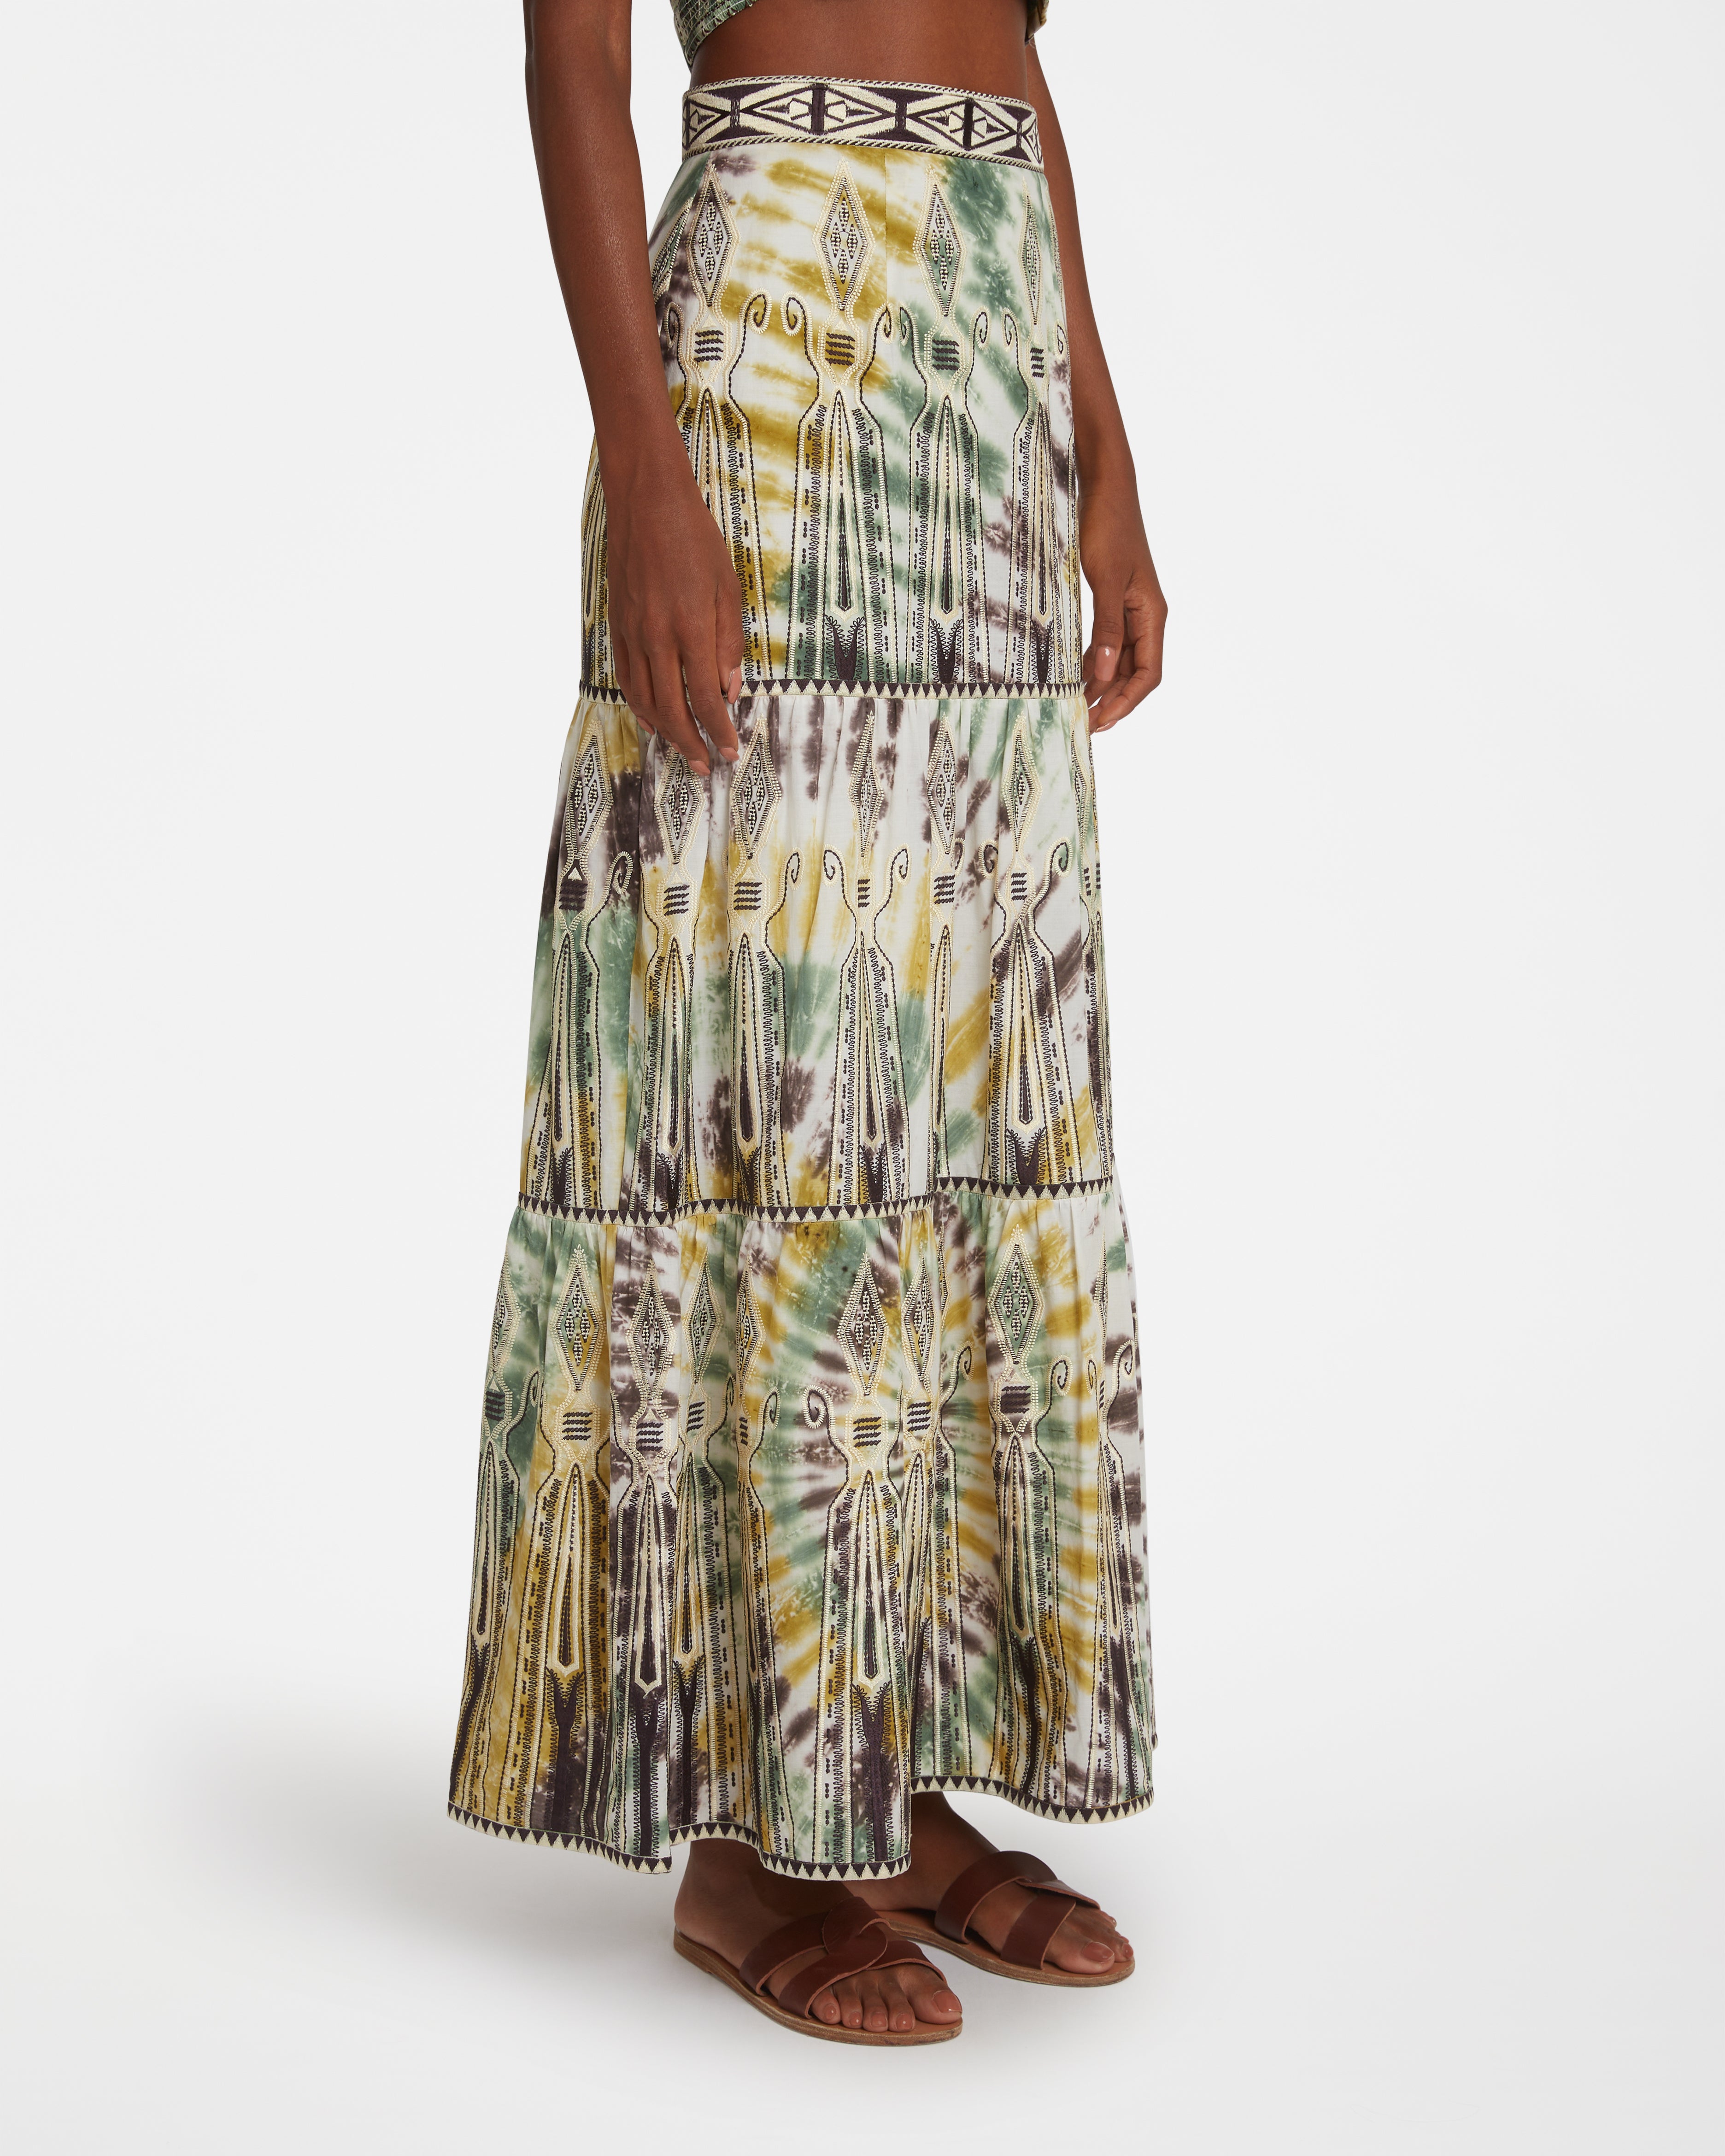 Elda Skirt With Tie Dye Embroidery